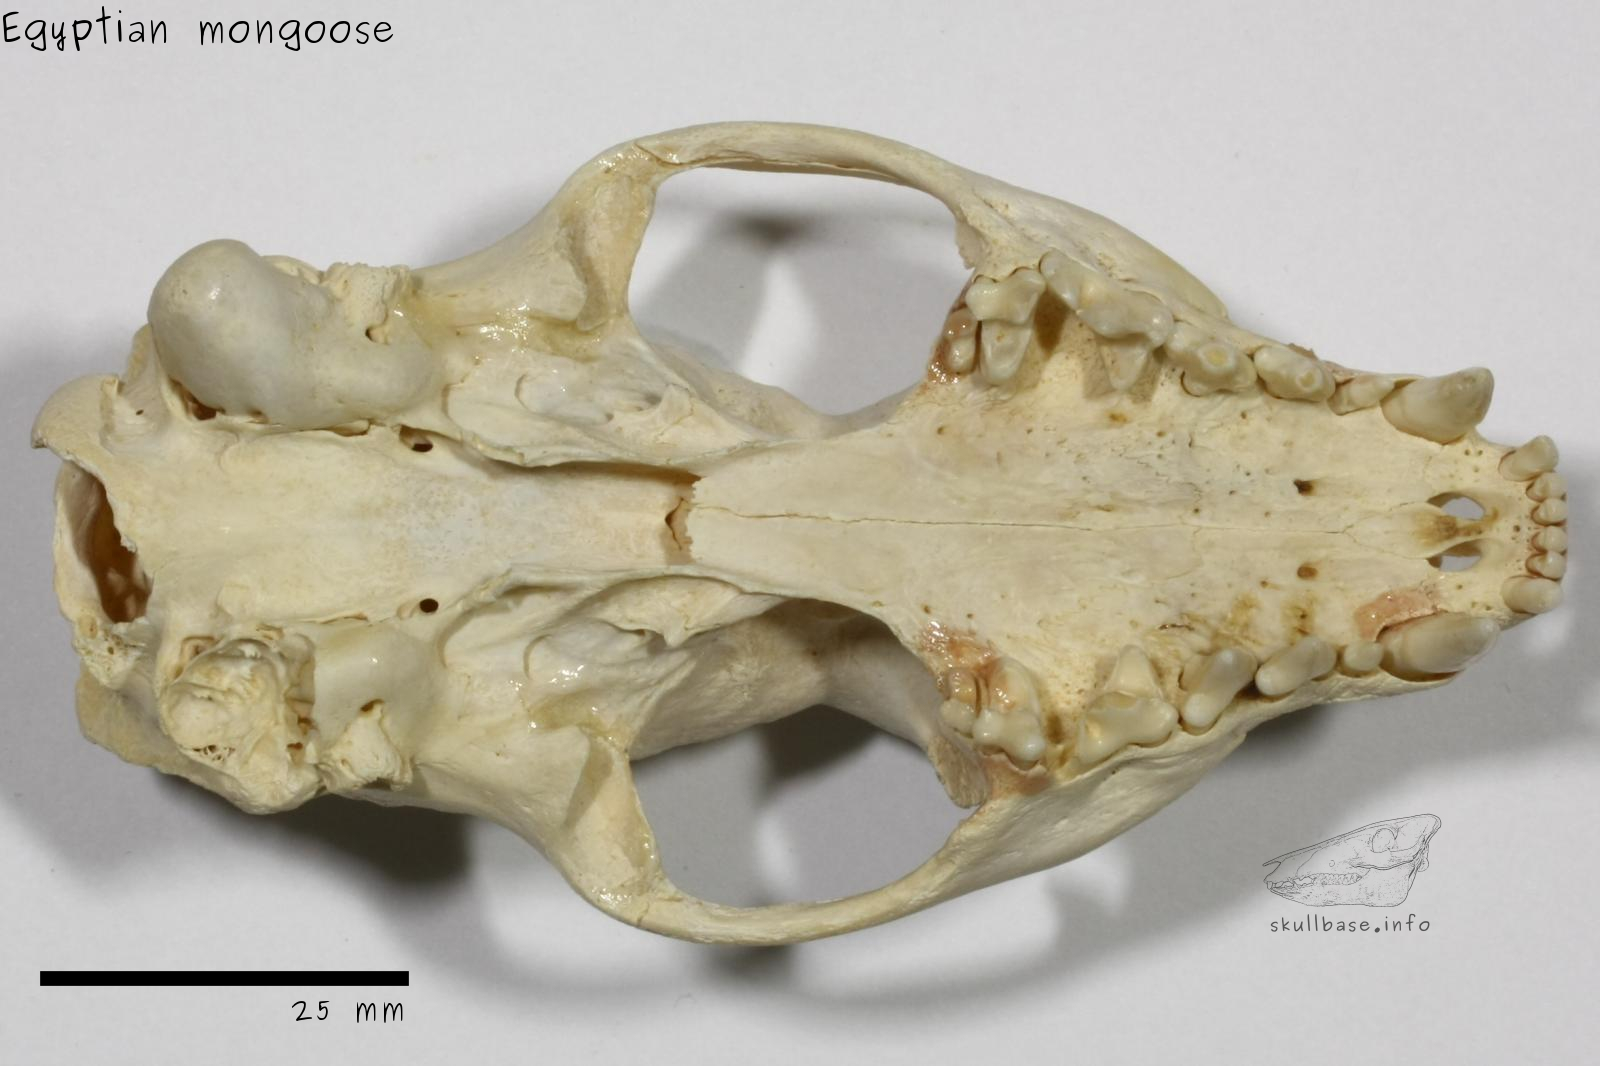 Egyptian mongoose (Herpestes ichneumon widdringtoni) skull ventral view